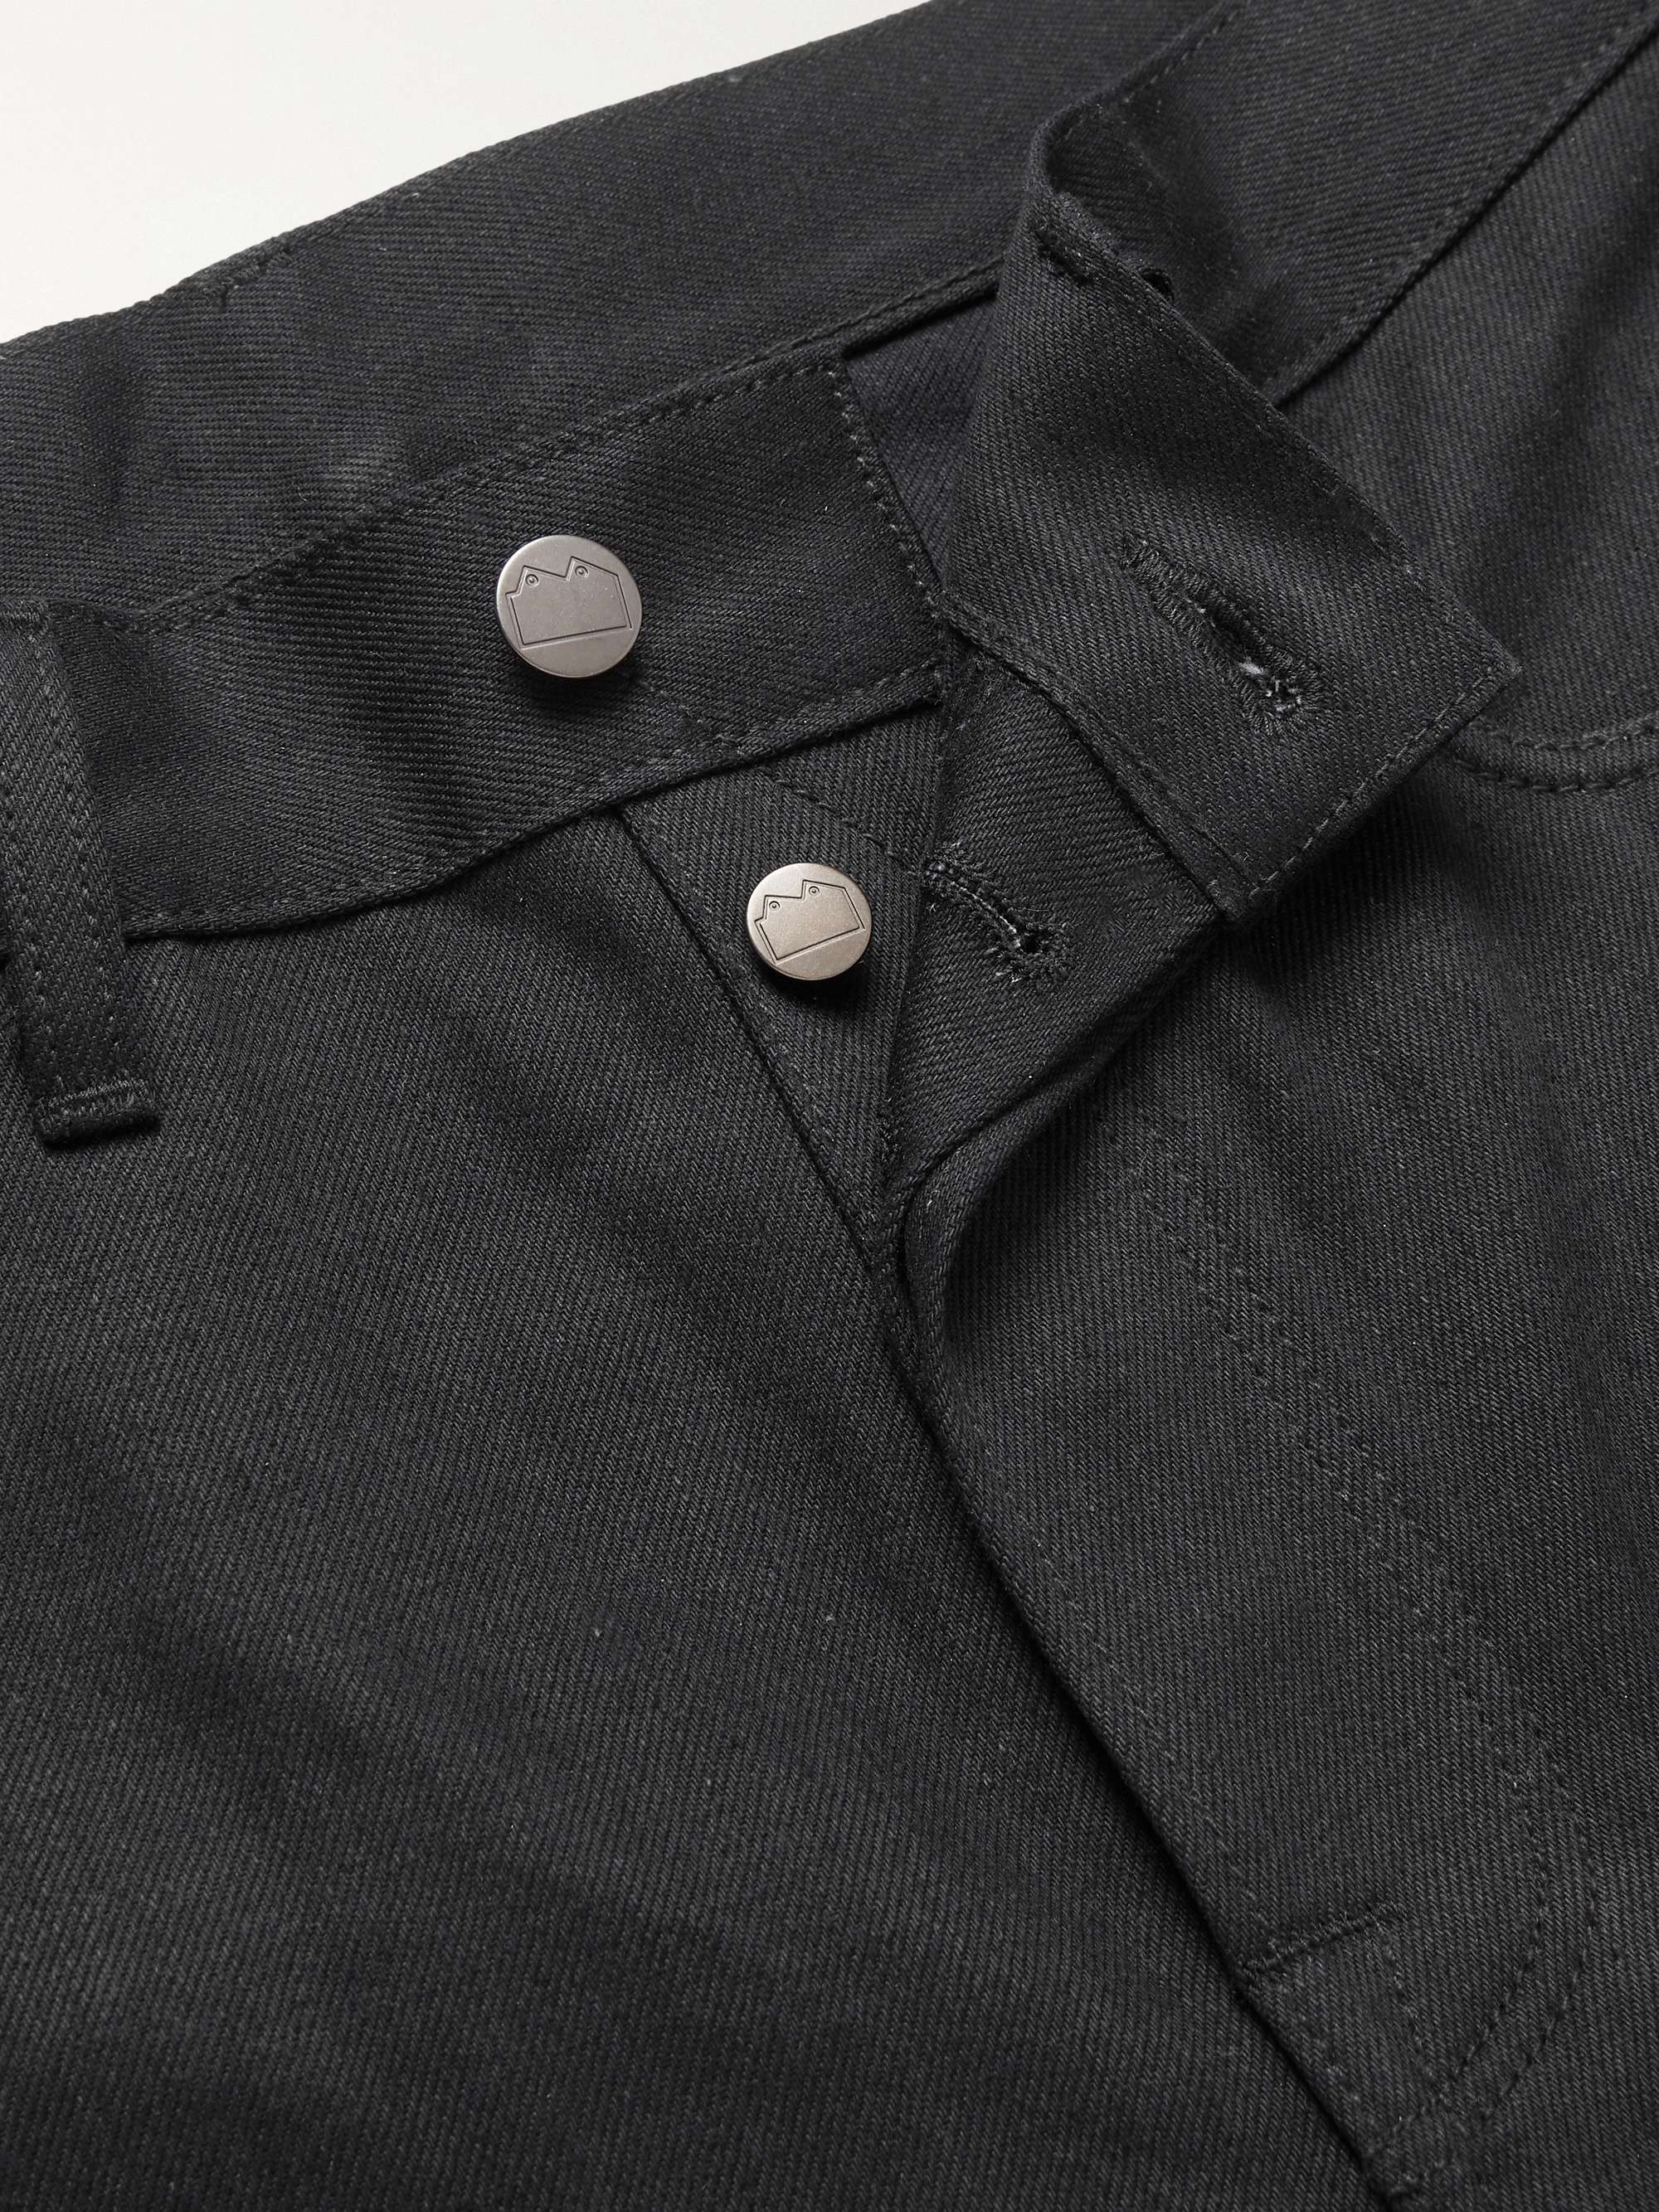 BLACKHORSE LANE ATELIERS W12 Slim-Fit Tapered Raw Organic Selvedge Denim Jeans